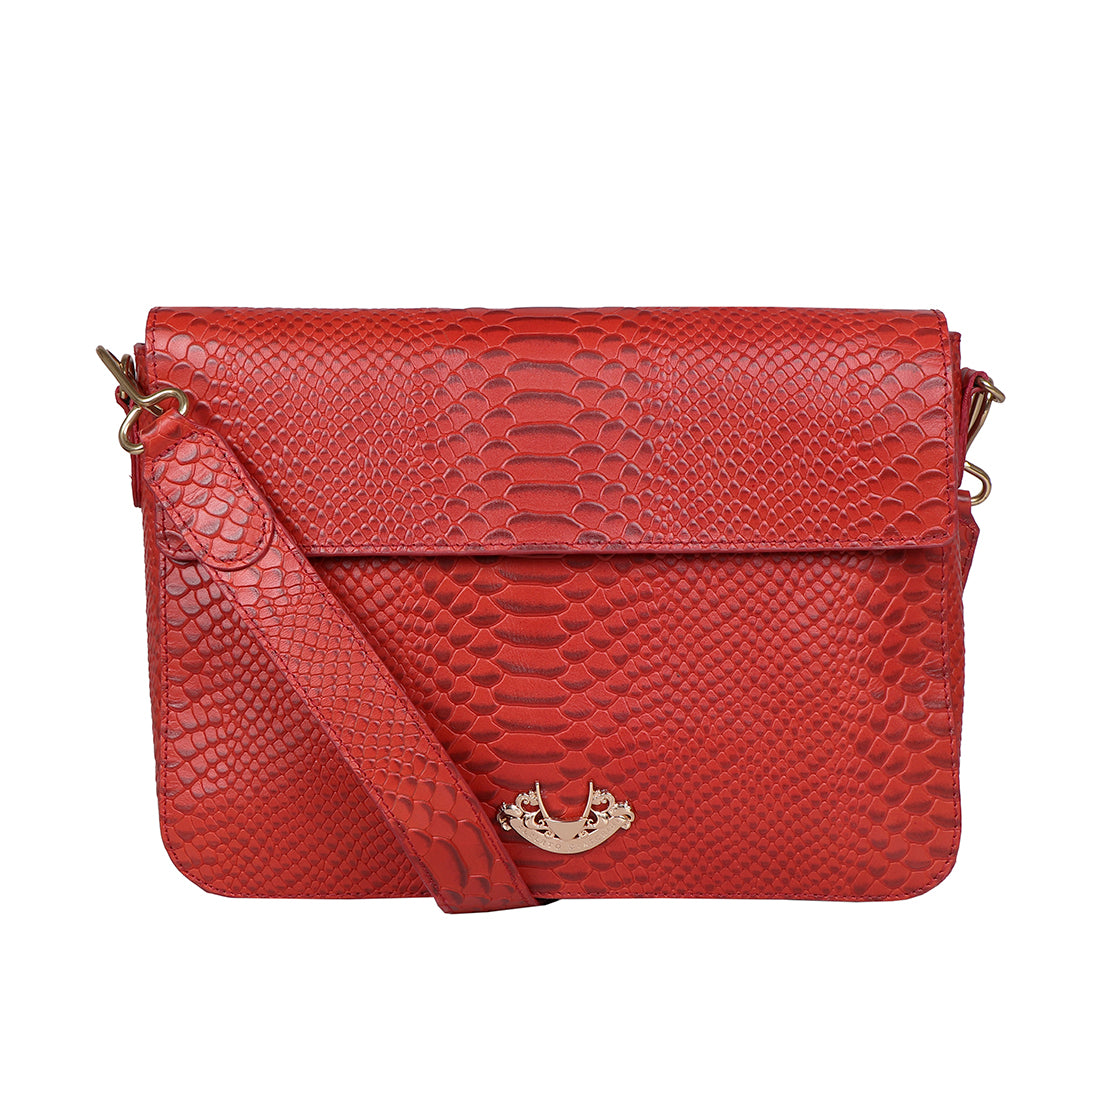 Buy Hidesign Black Lotus SB Women's Handbags online